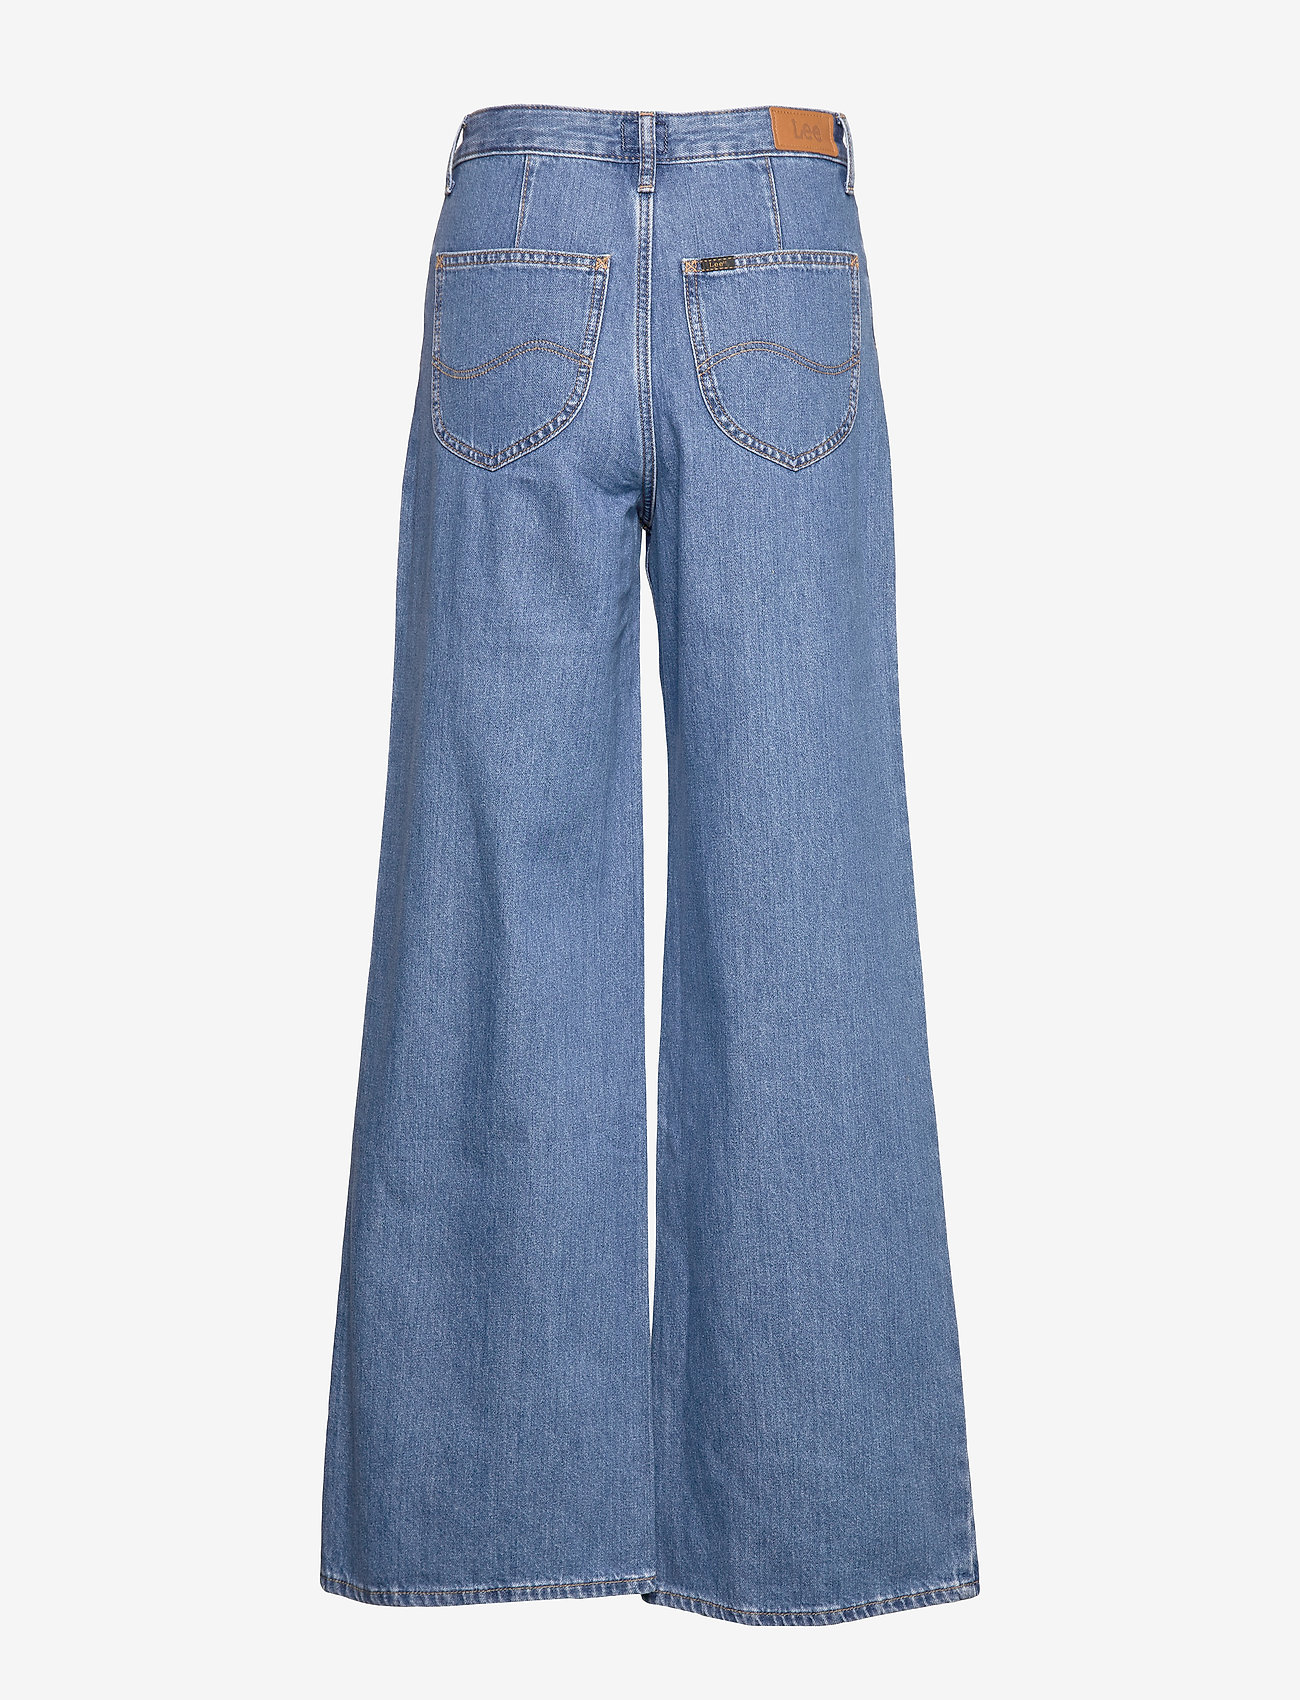 Lee Jeans Super High A Line Fl (Clean Rosewood) - 800 kr | Boozt.com